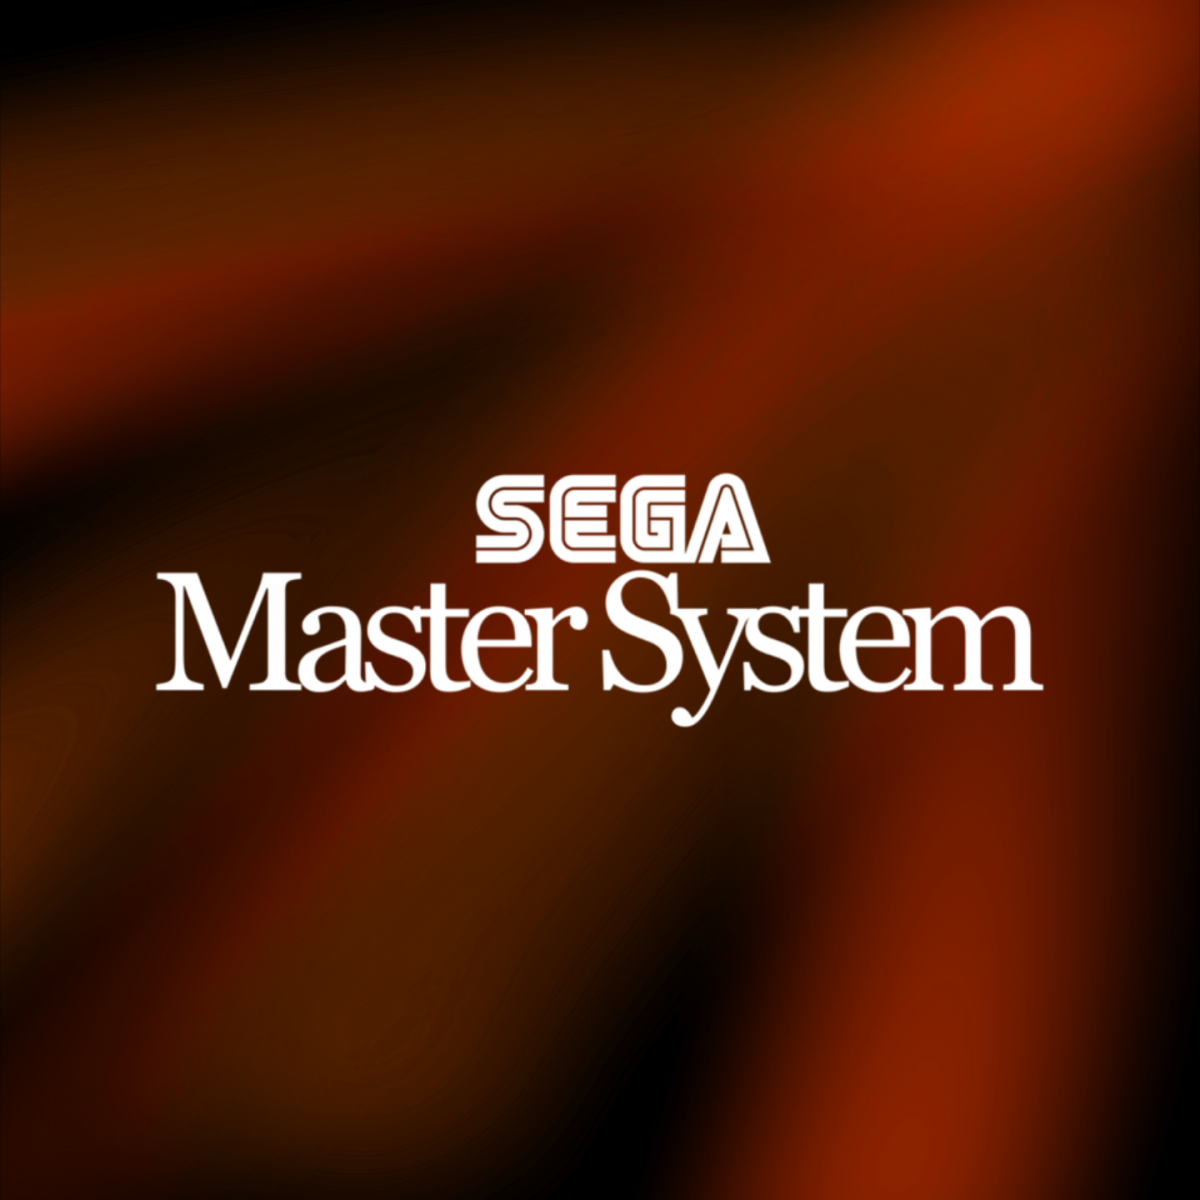 Sega-Master-System.png